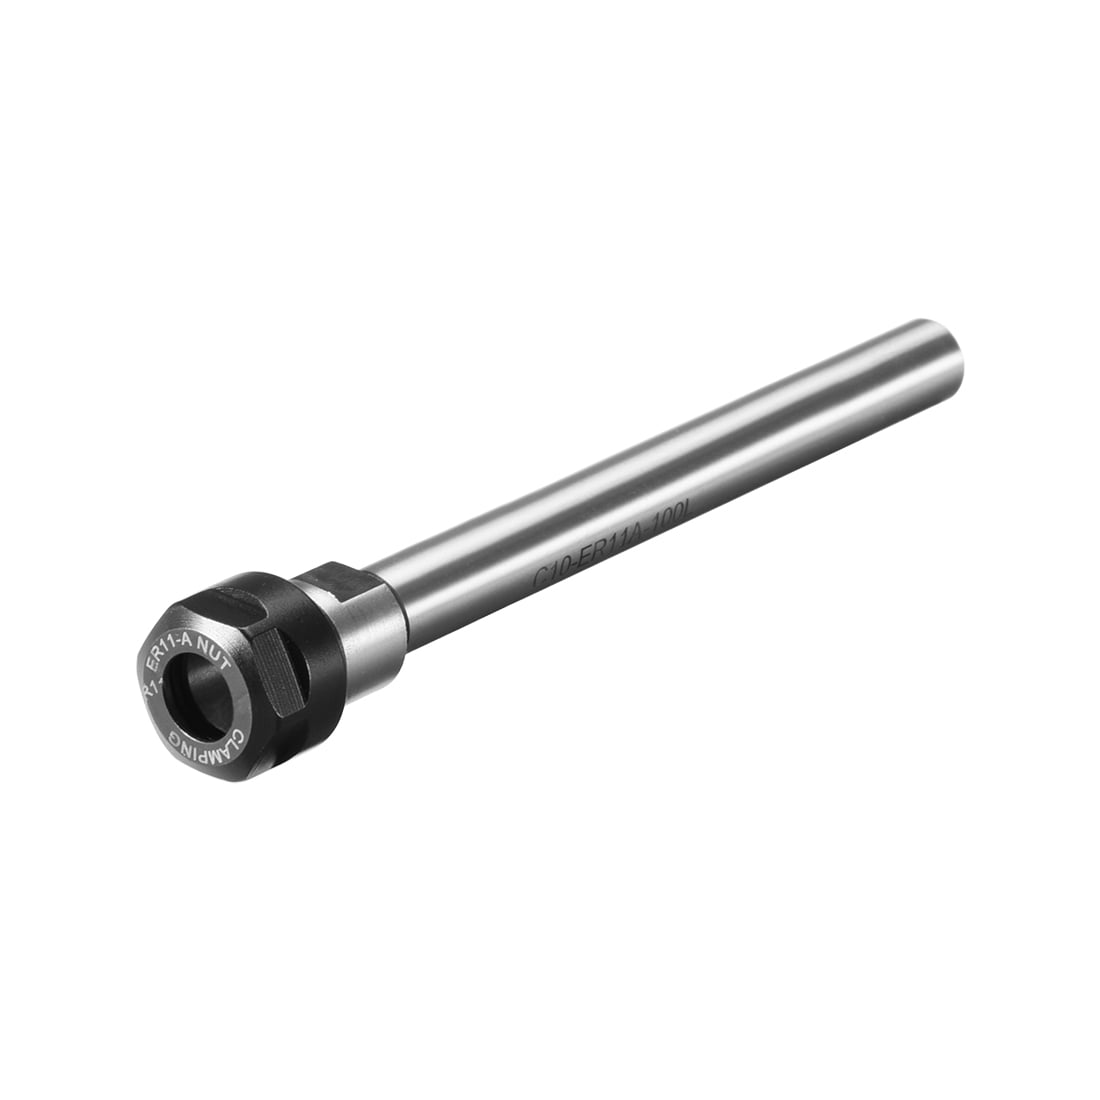 C12-ER11A-100L Collet Chuck Holder Straight CNC Milling Extension Rod